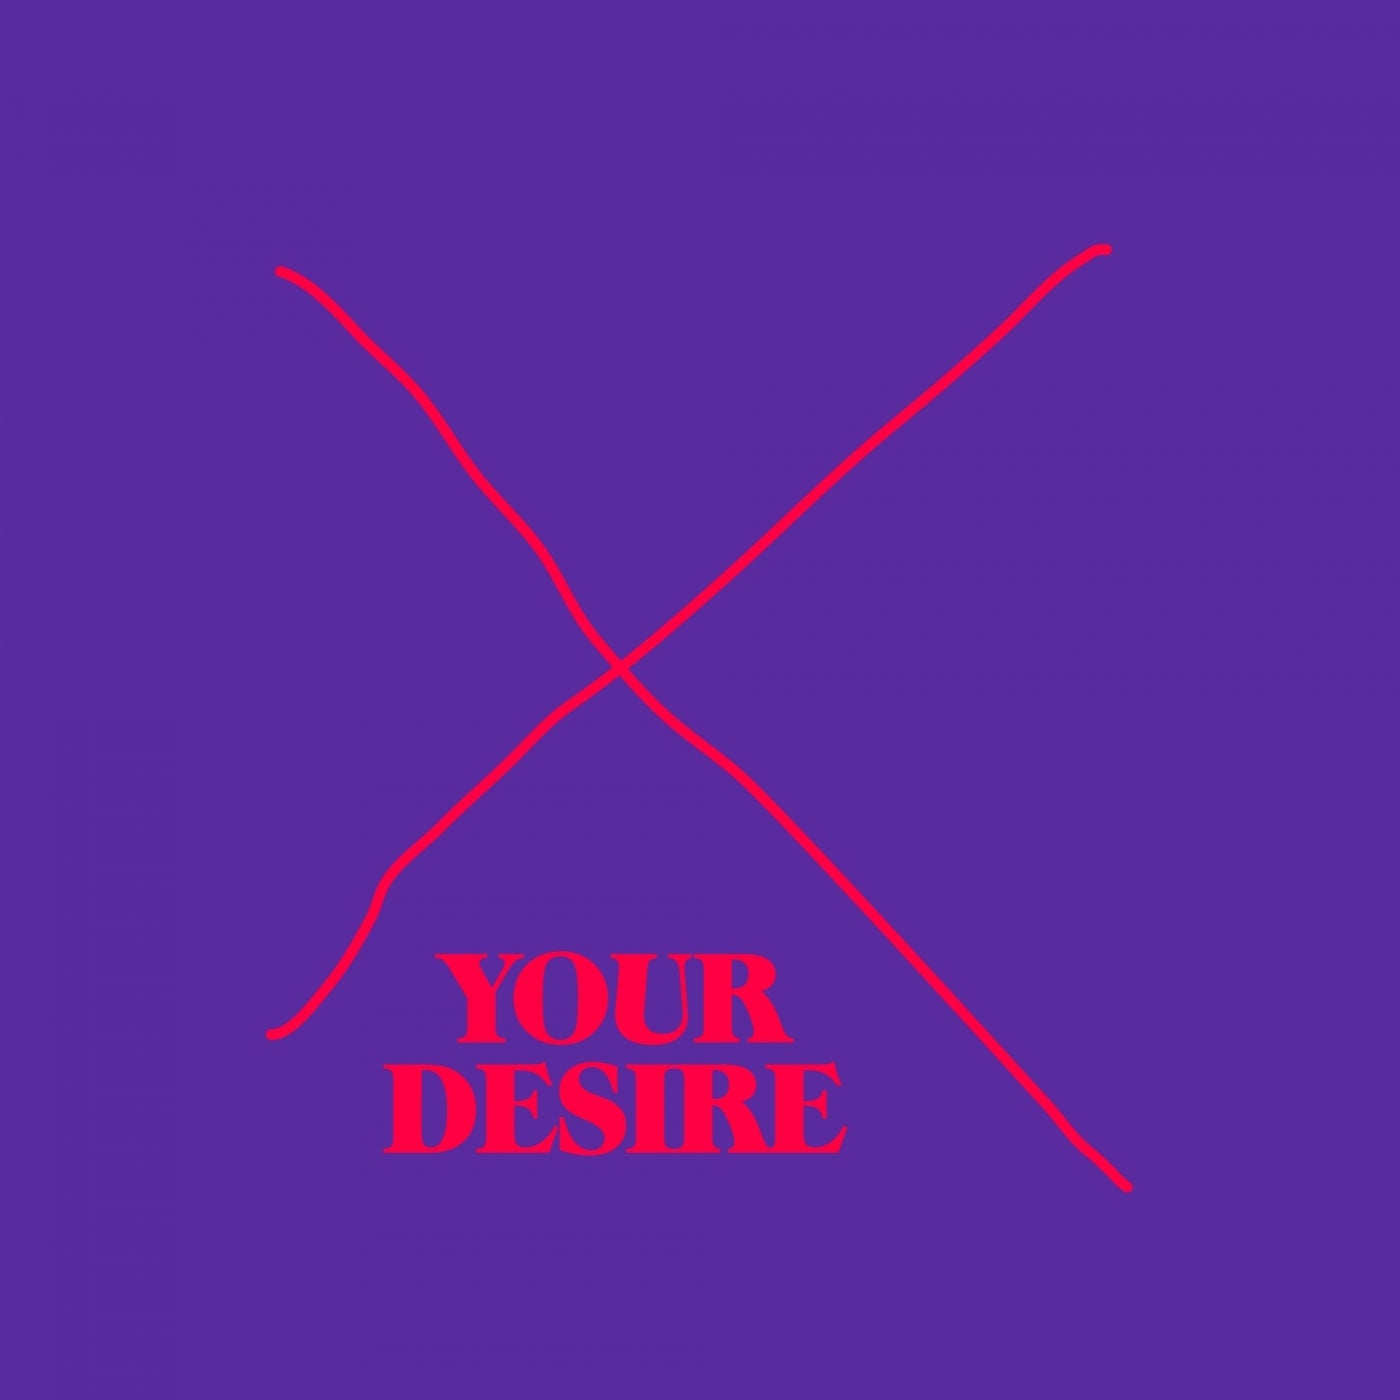 Your Desire